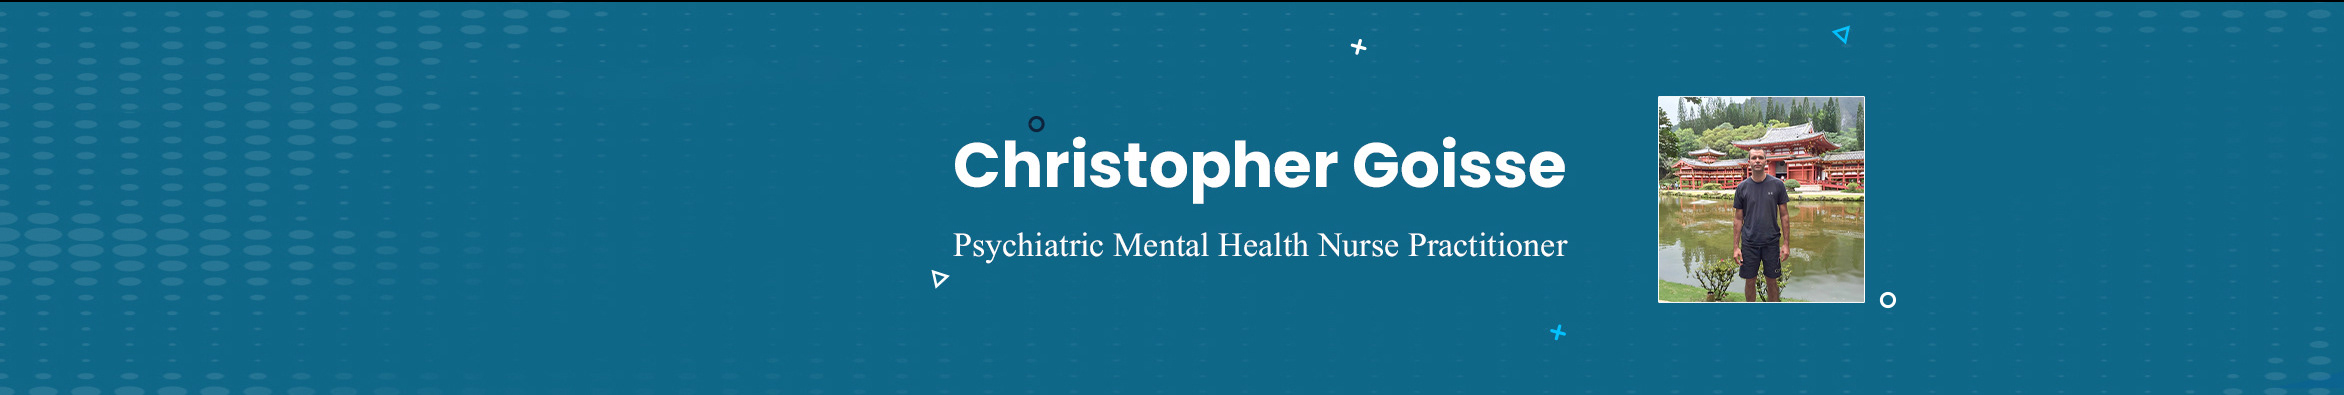 Christopher Goisse's profile banner